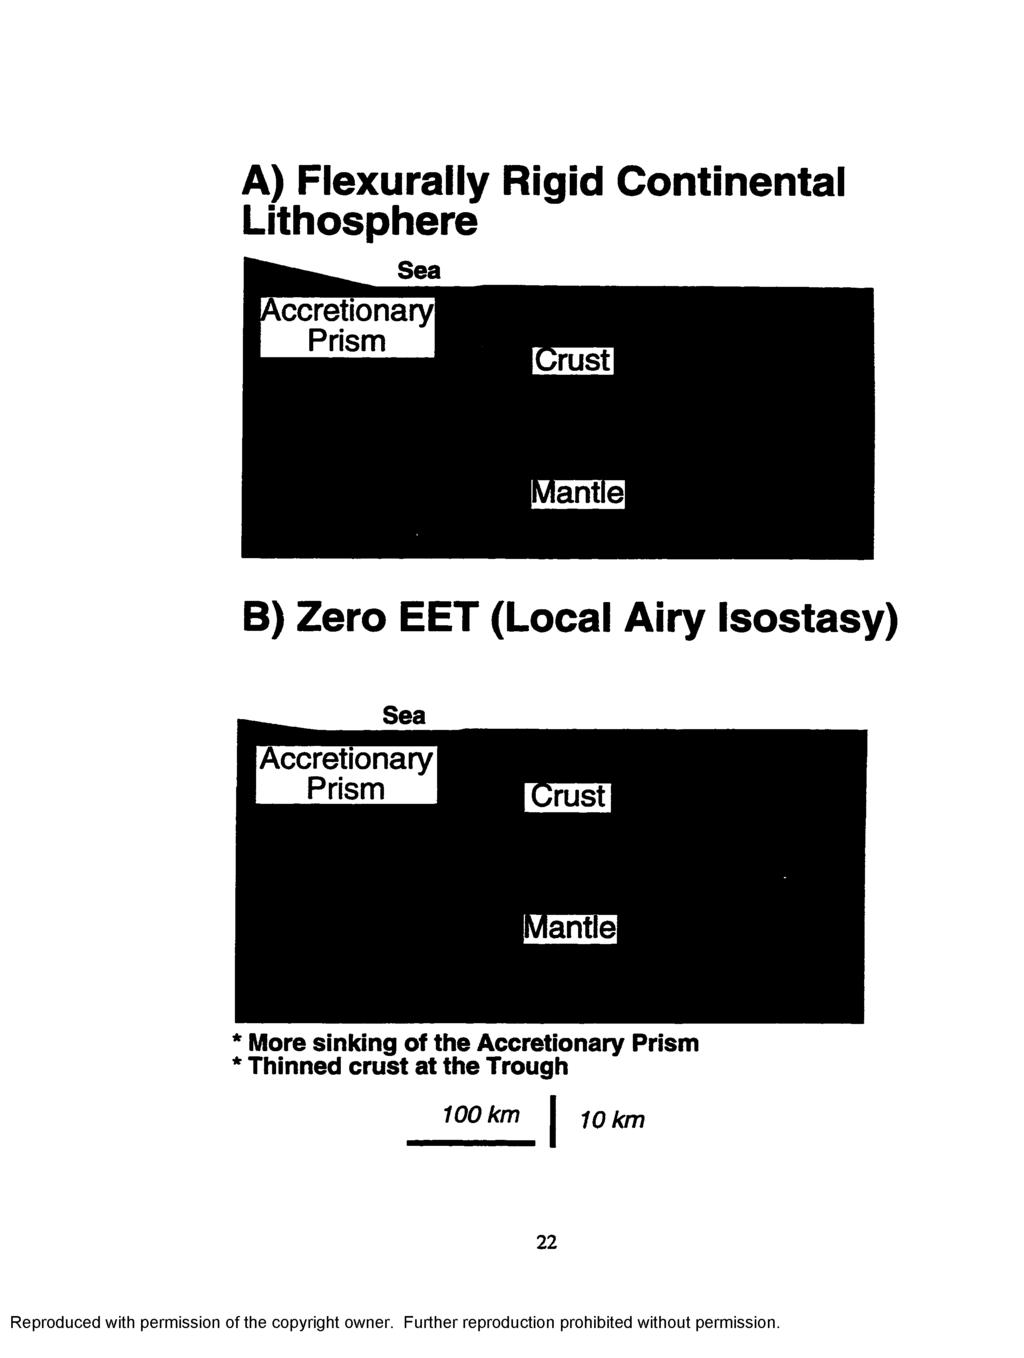 A) Flexurally Rigid Continental Lithosphere ccretionary Prism B) Zero EET (Local Airy Isostasy) Sea